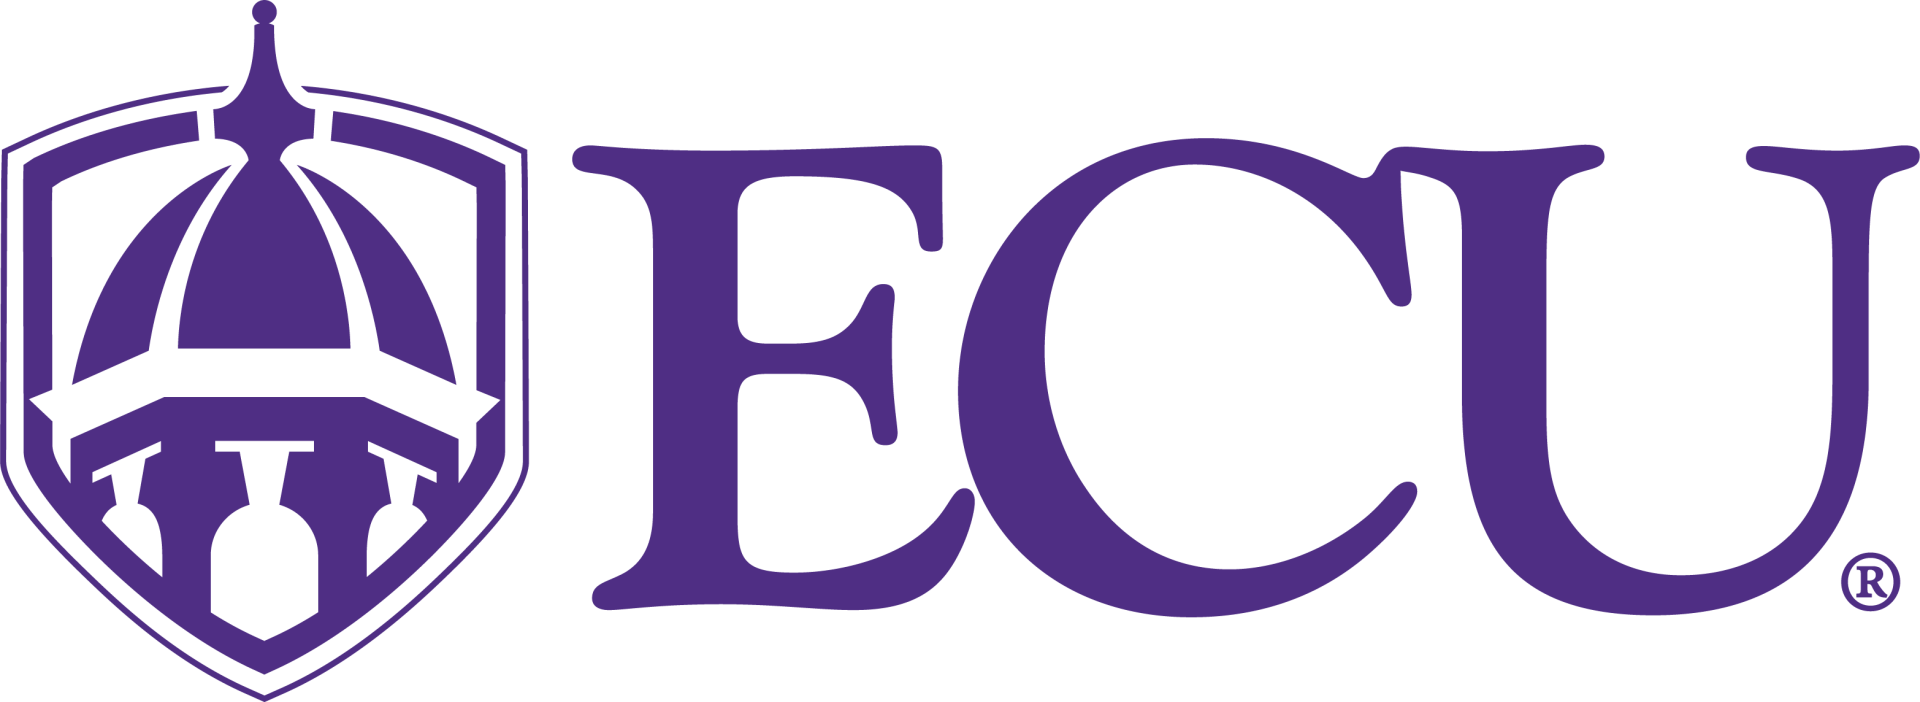 uta logo